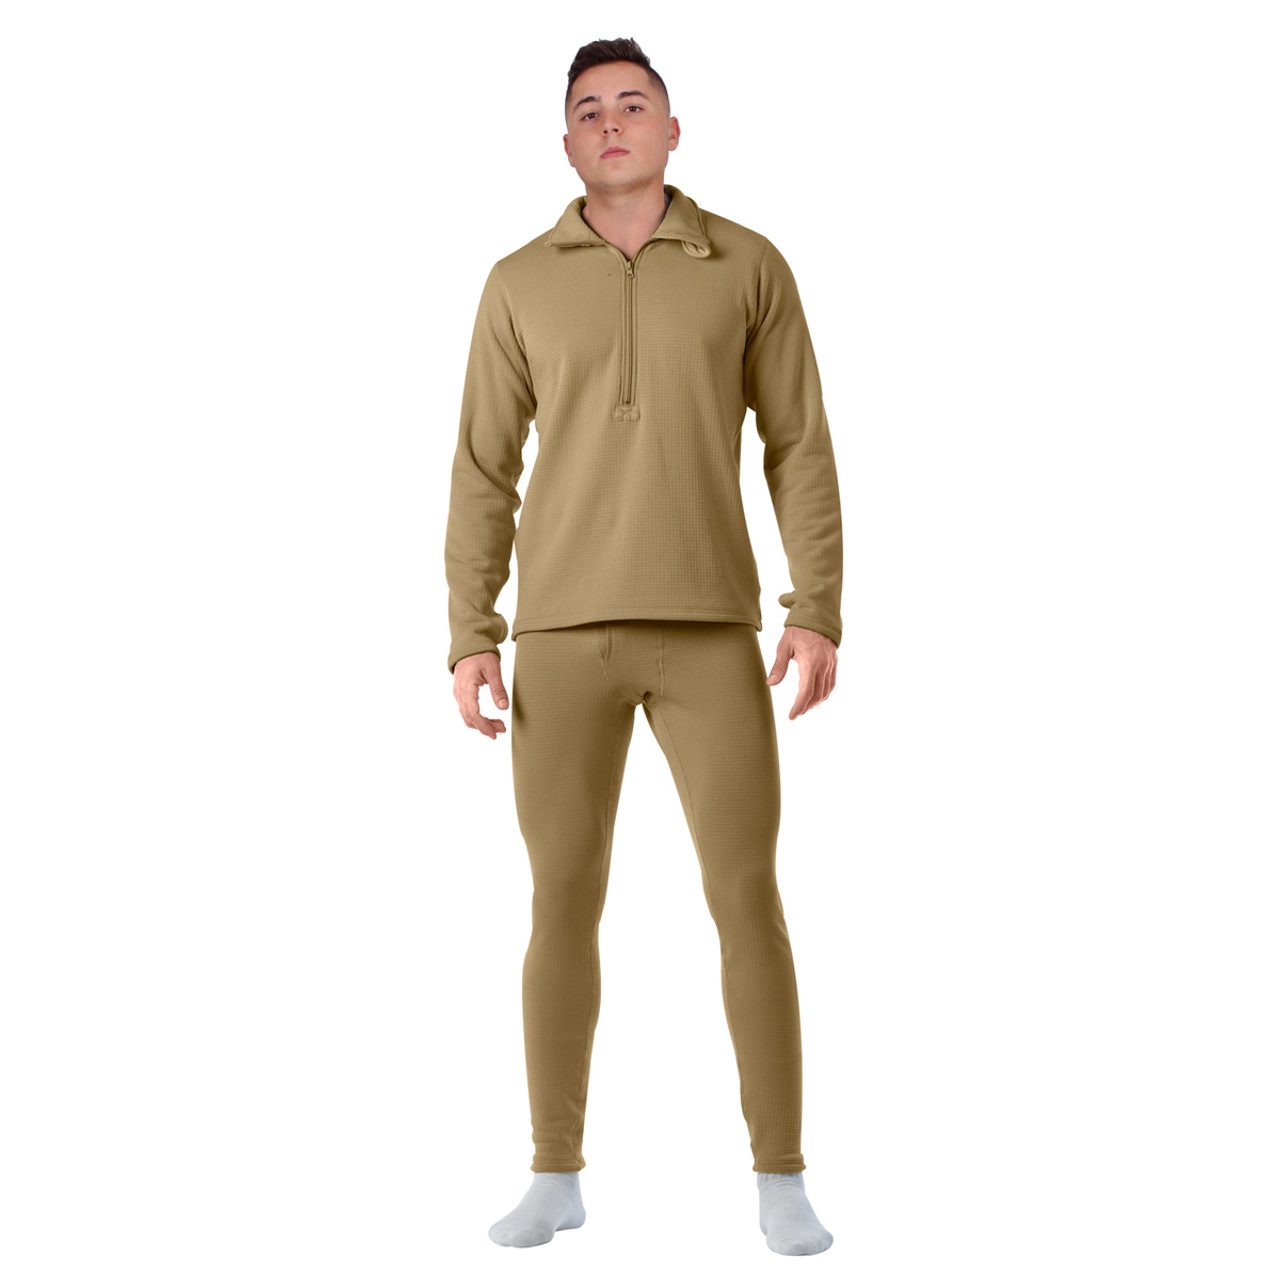 Shop AR 670-1 Coyote Brown Gen III Level II Underwear - Fatigues Army Navy